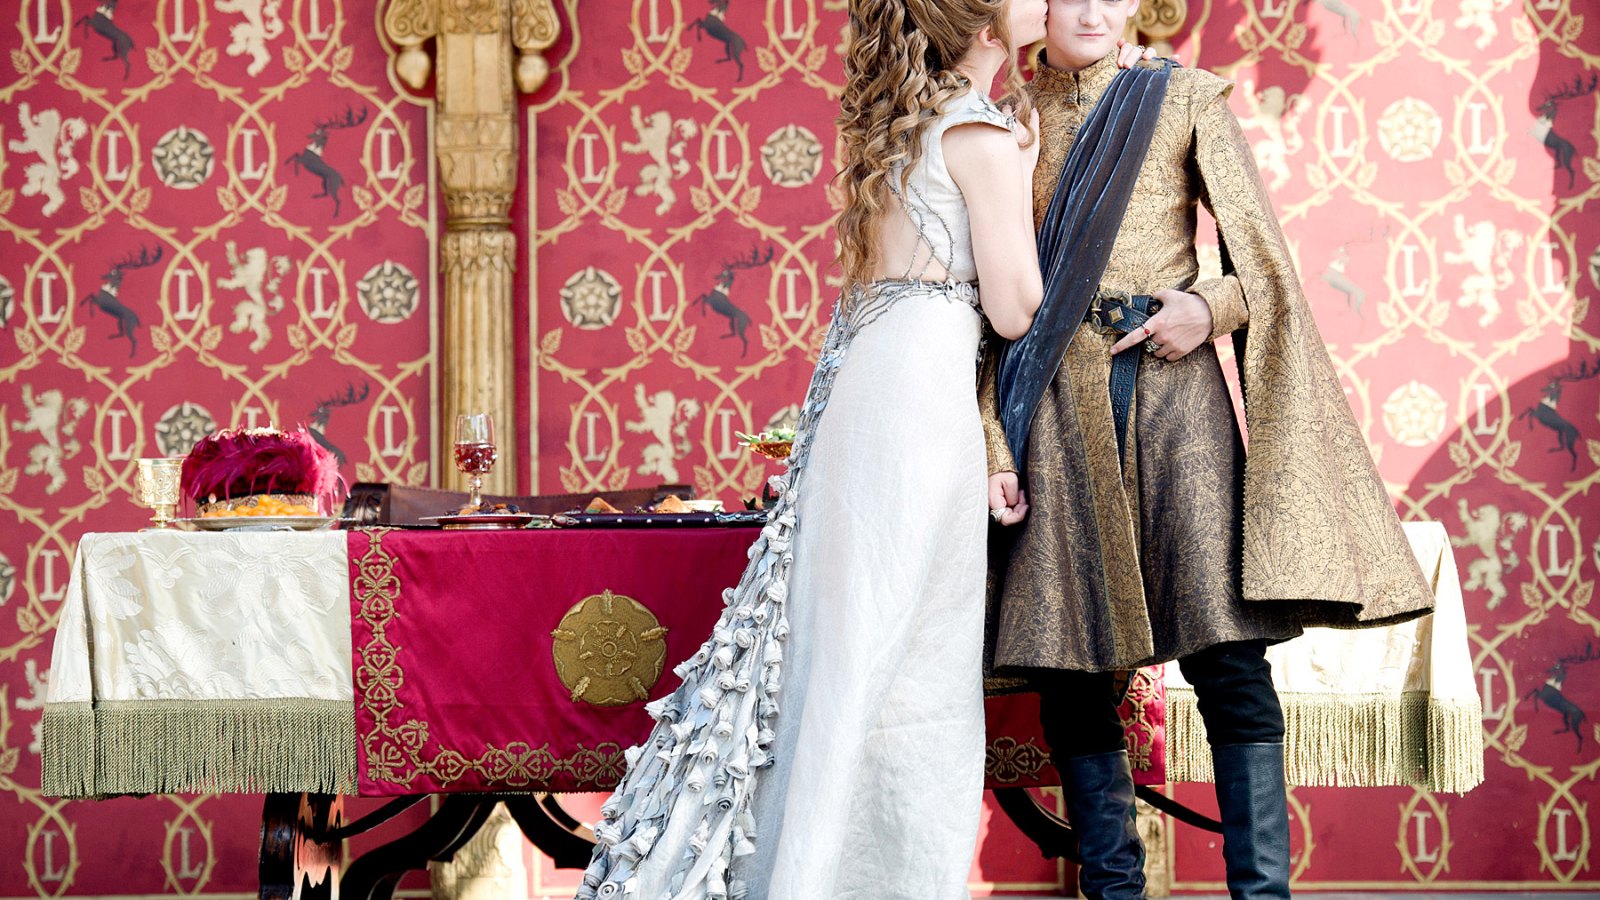 Natalie Dormer and Jack Gleeson in Game of Thrones